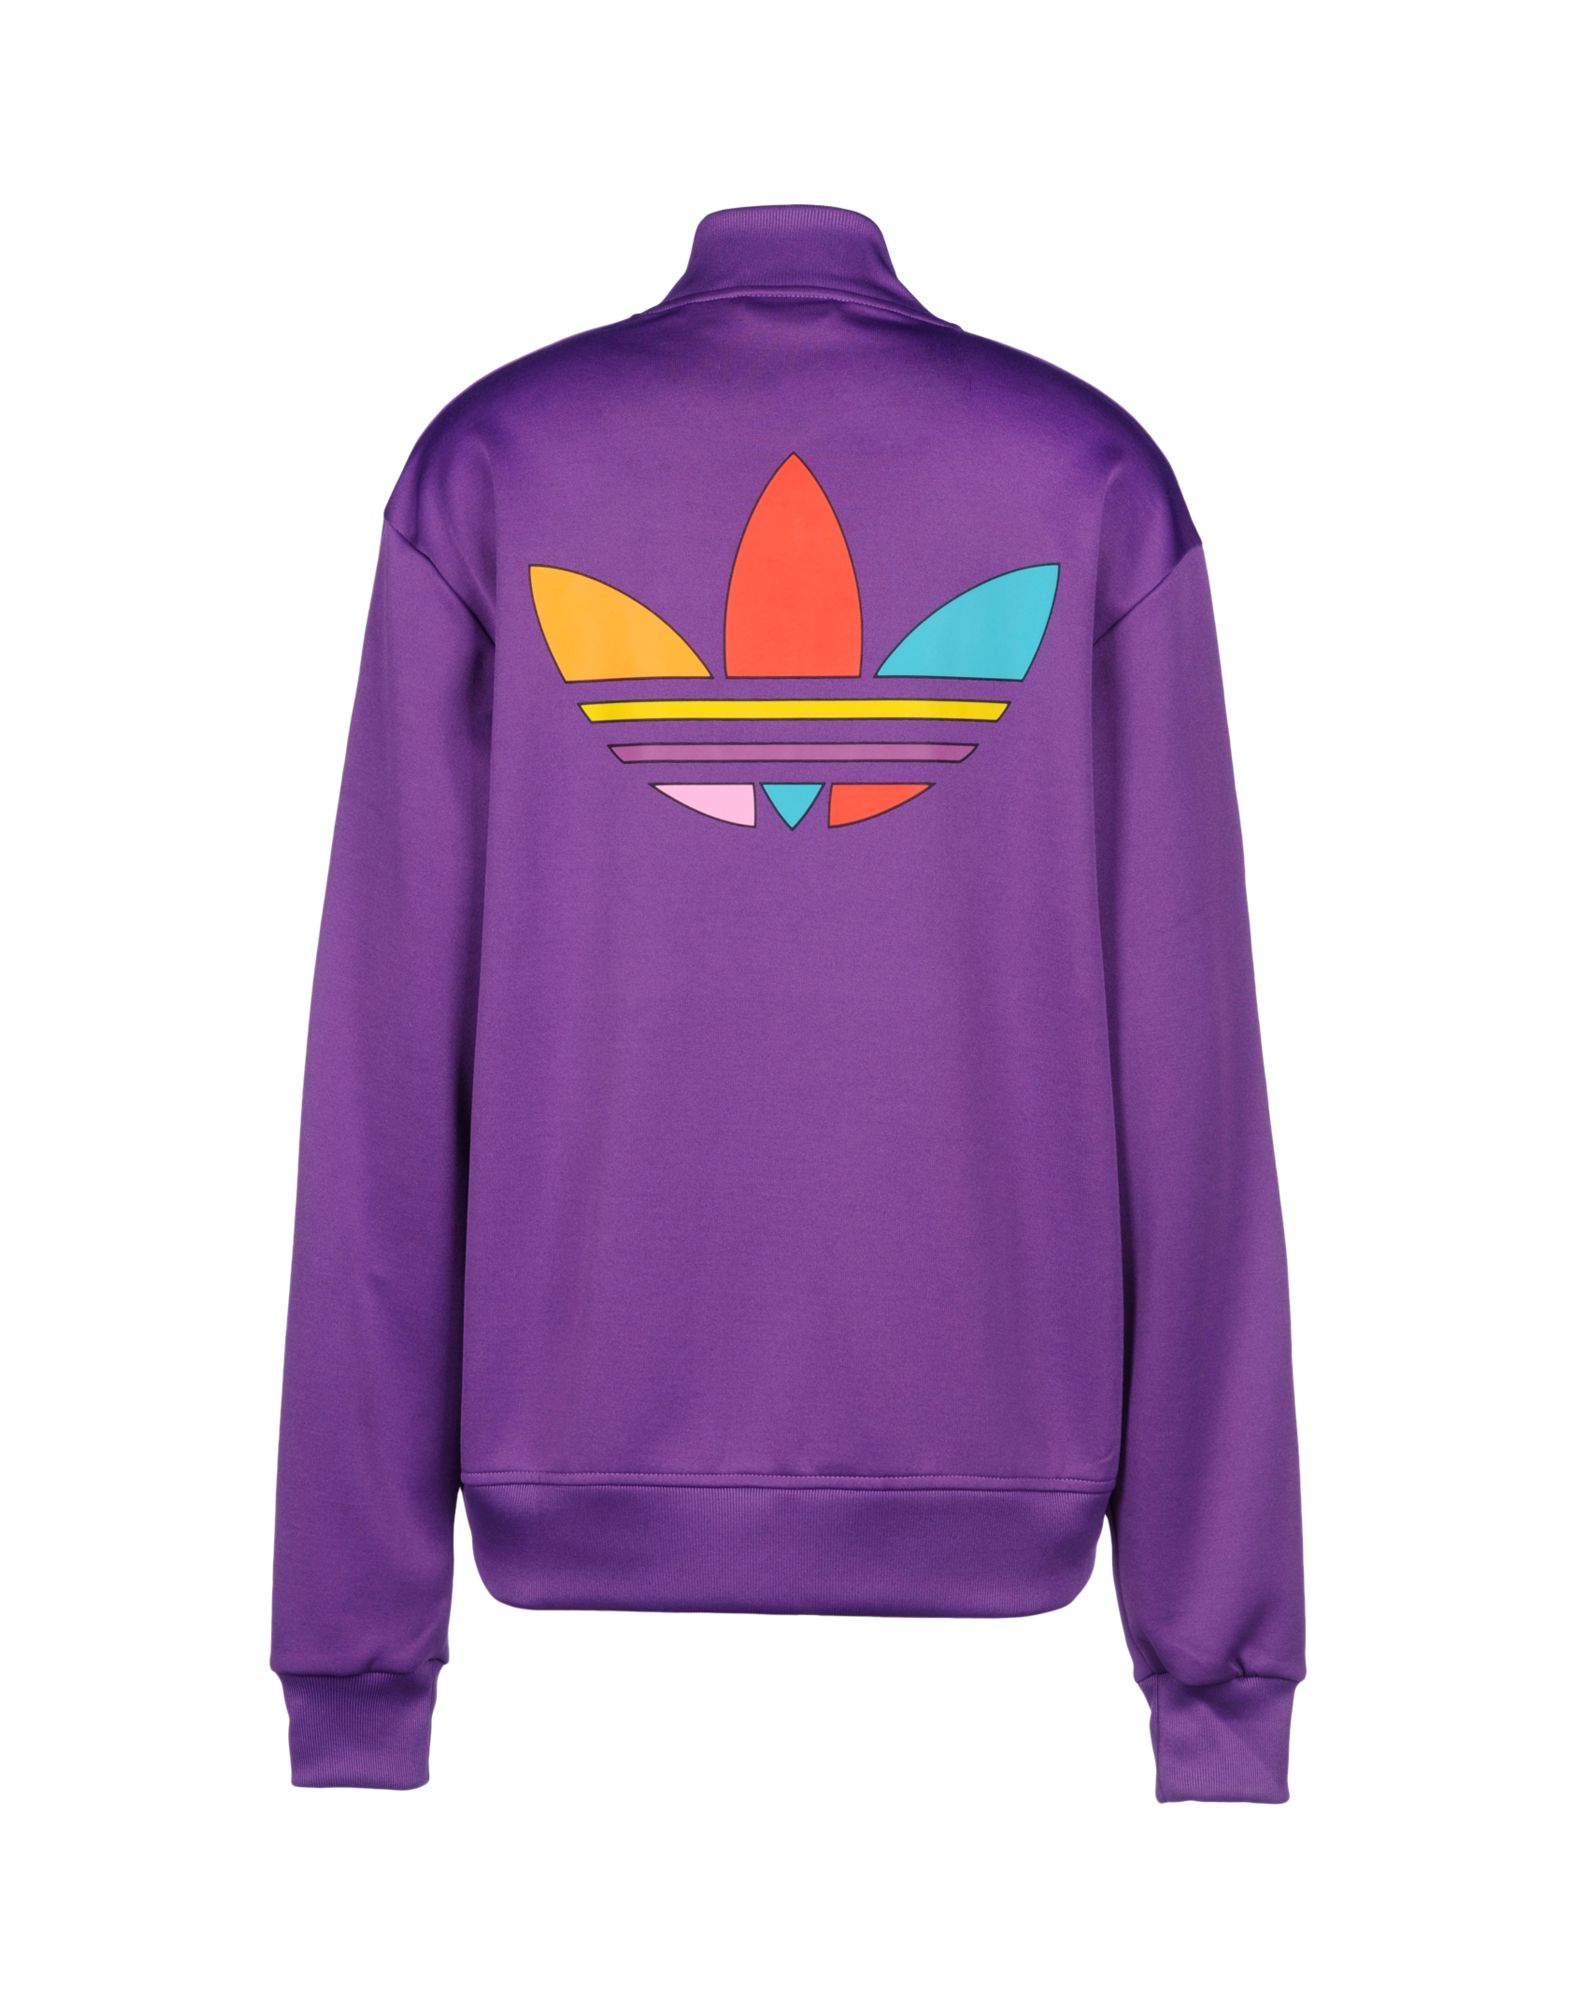 Lyst - Adidas Originals Sweatshirt in Purple